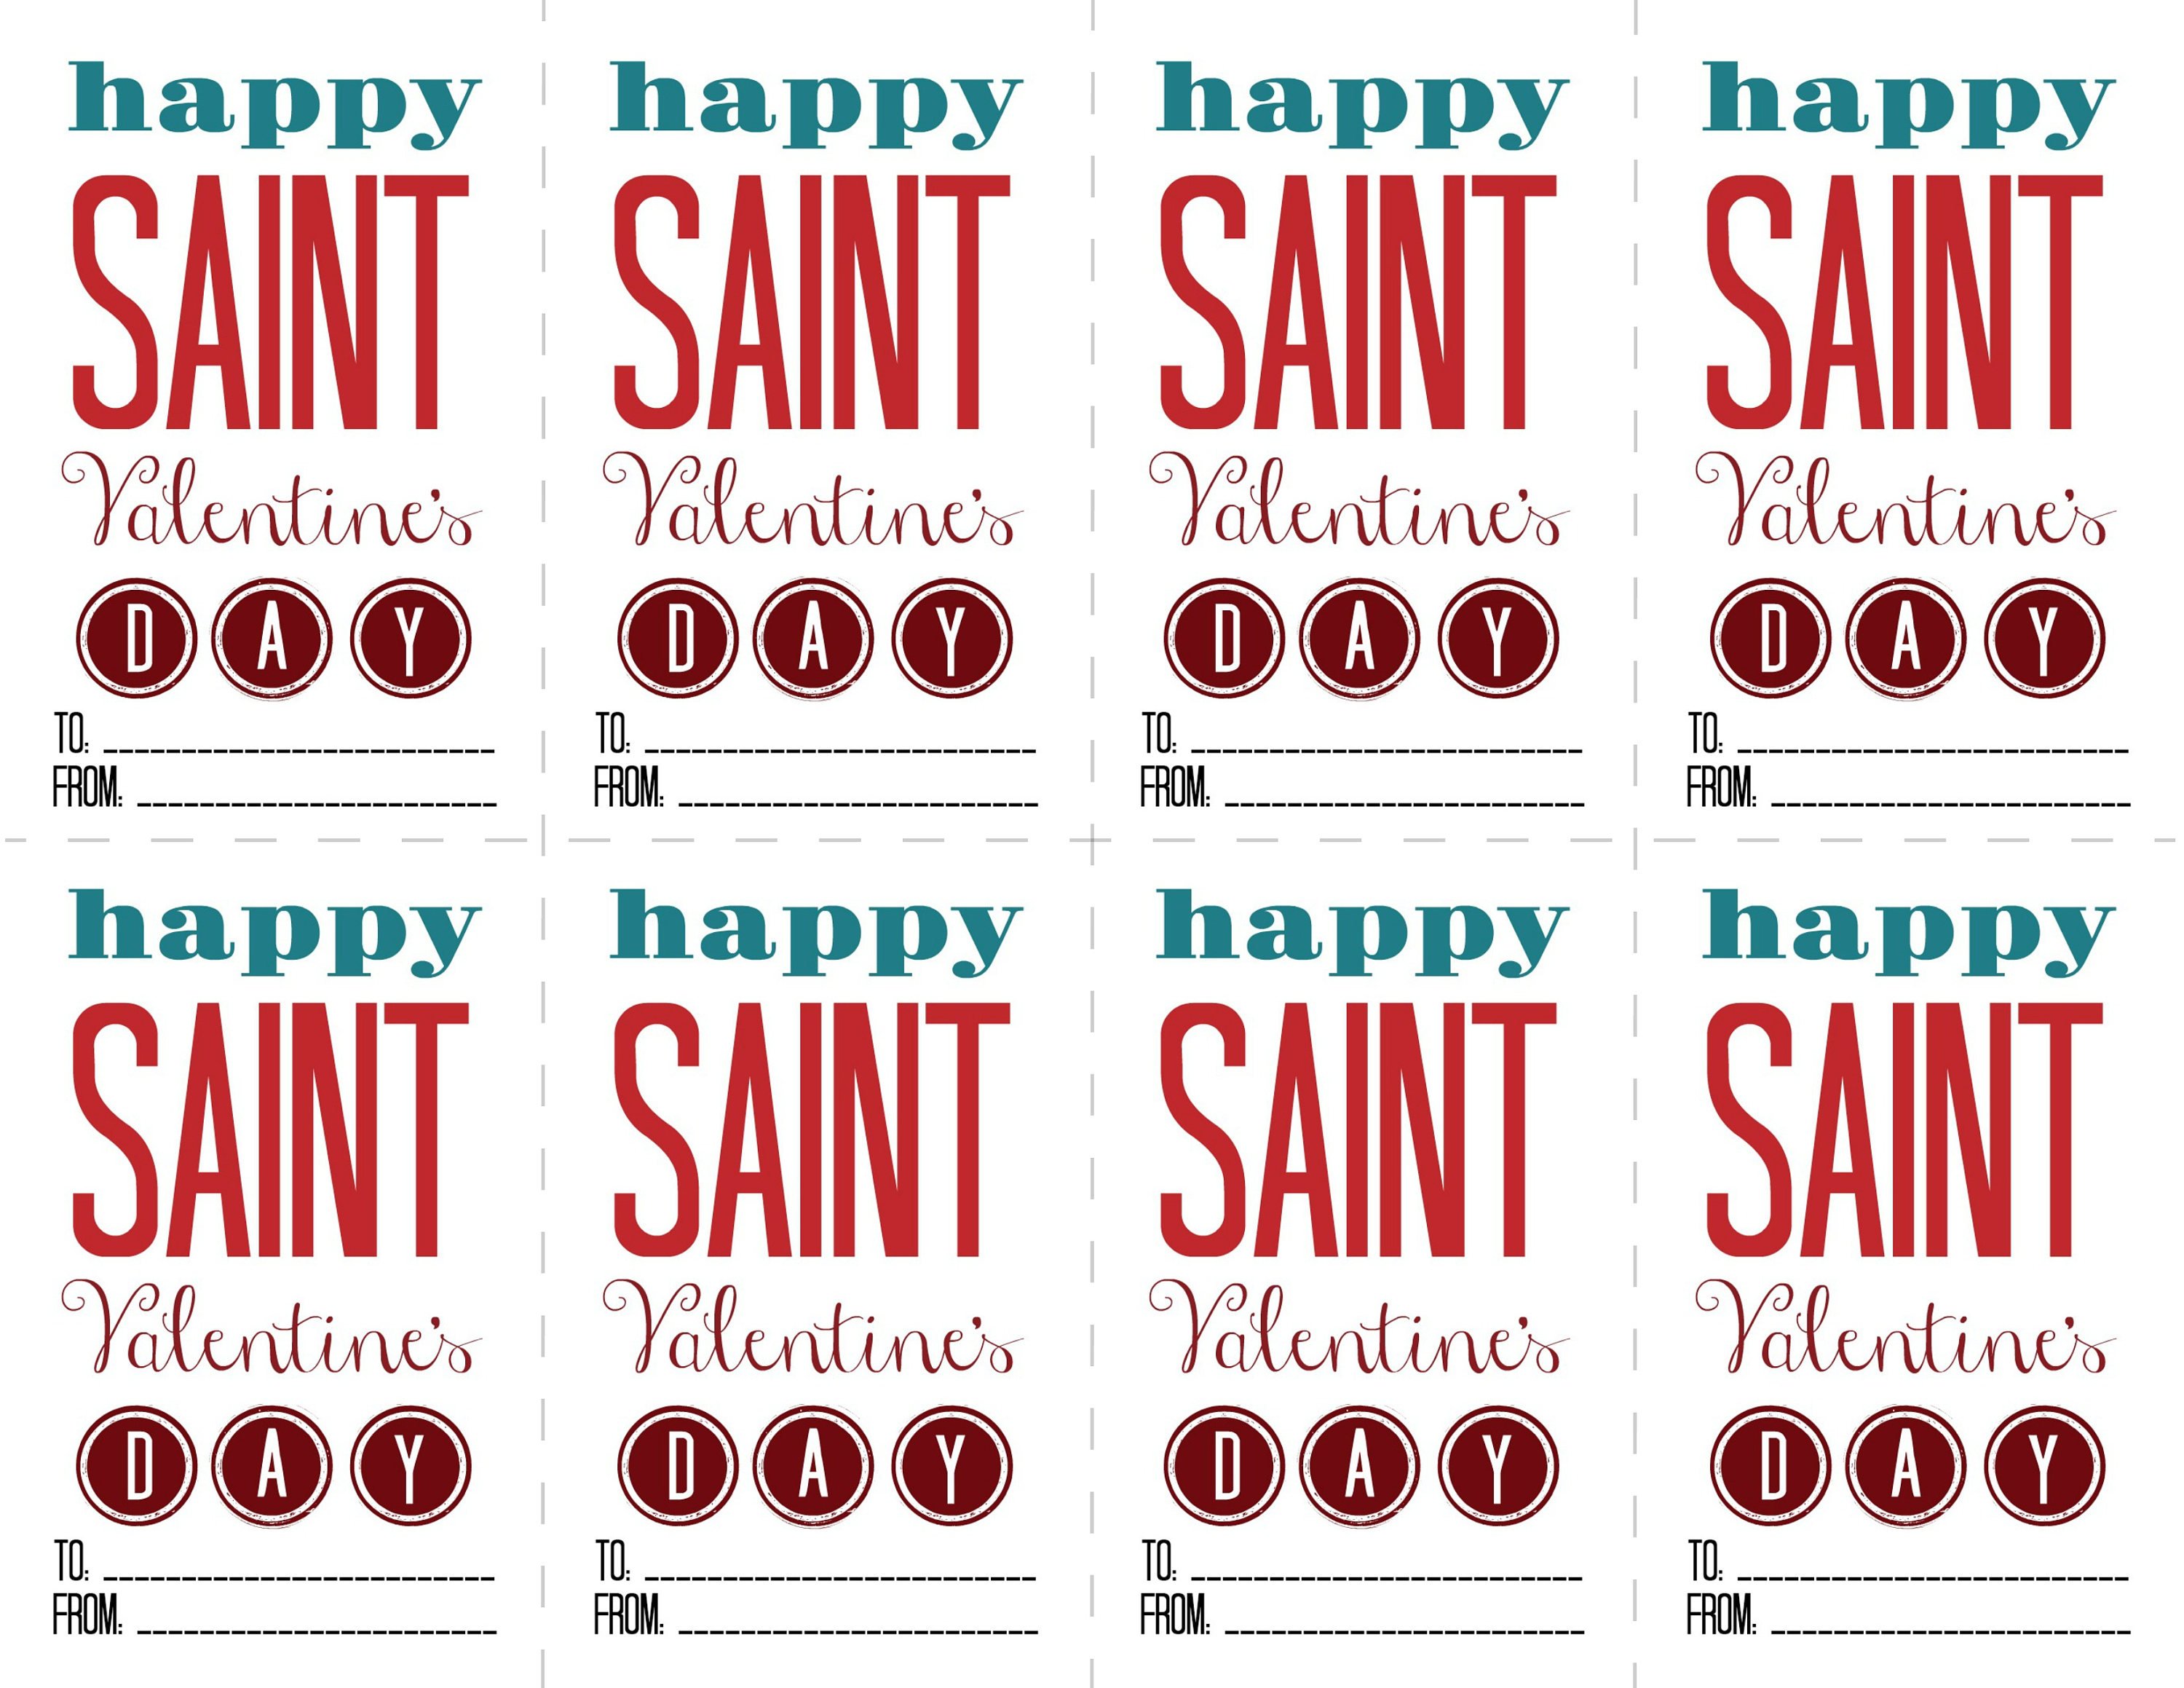 catholic-valentine-cards-digital-download-catholic-hearts-8-5x11